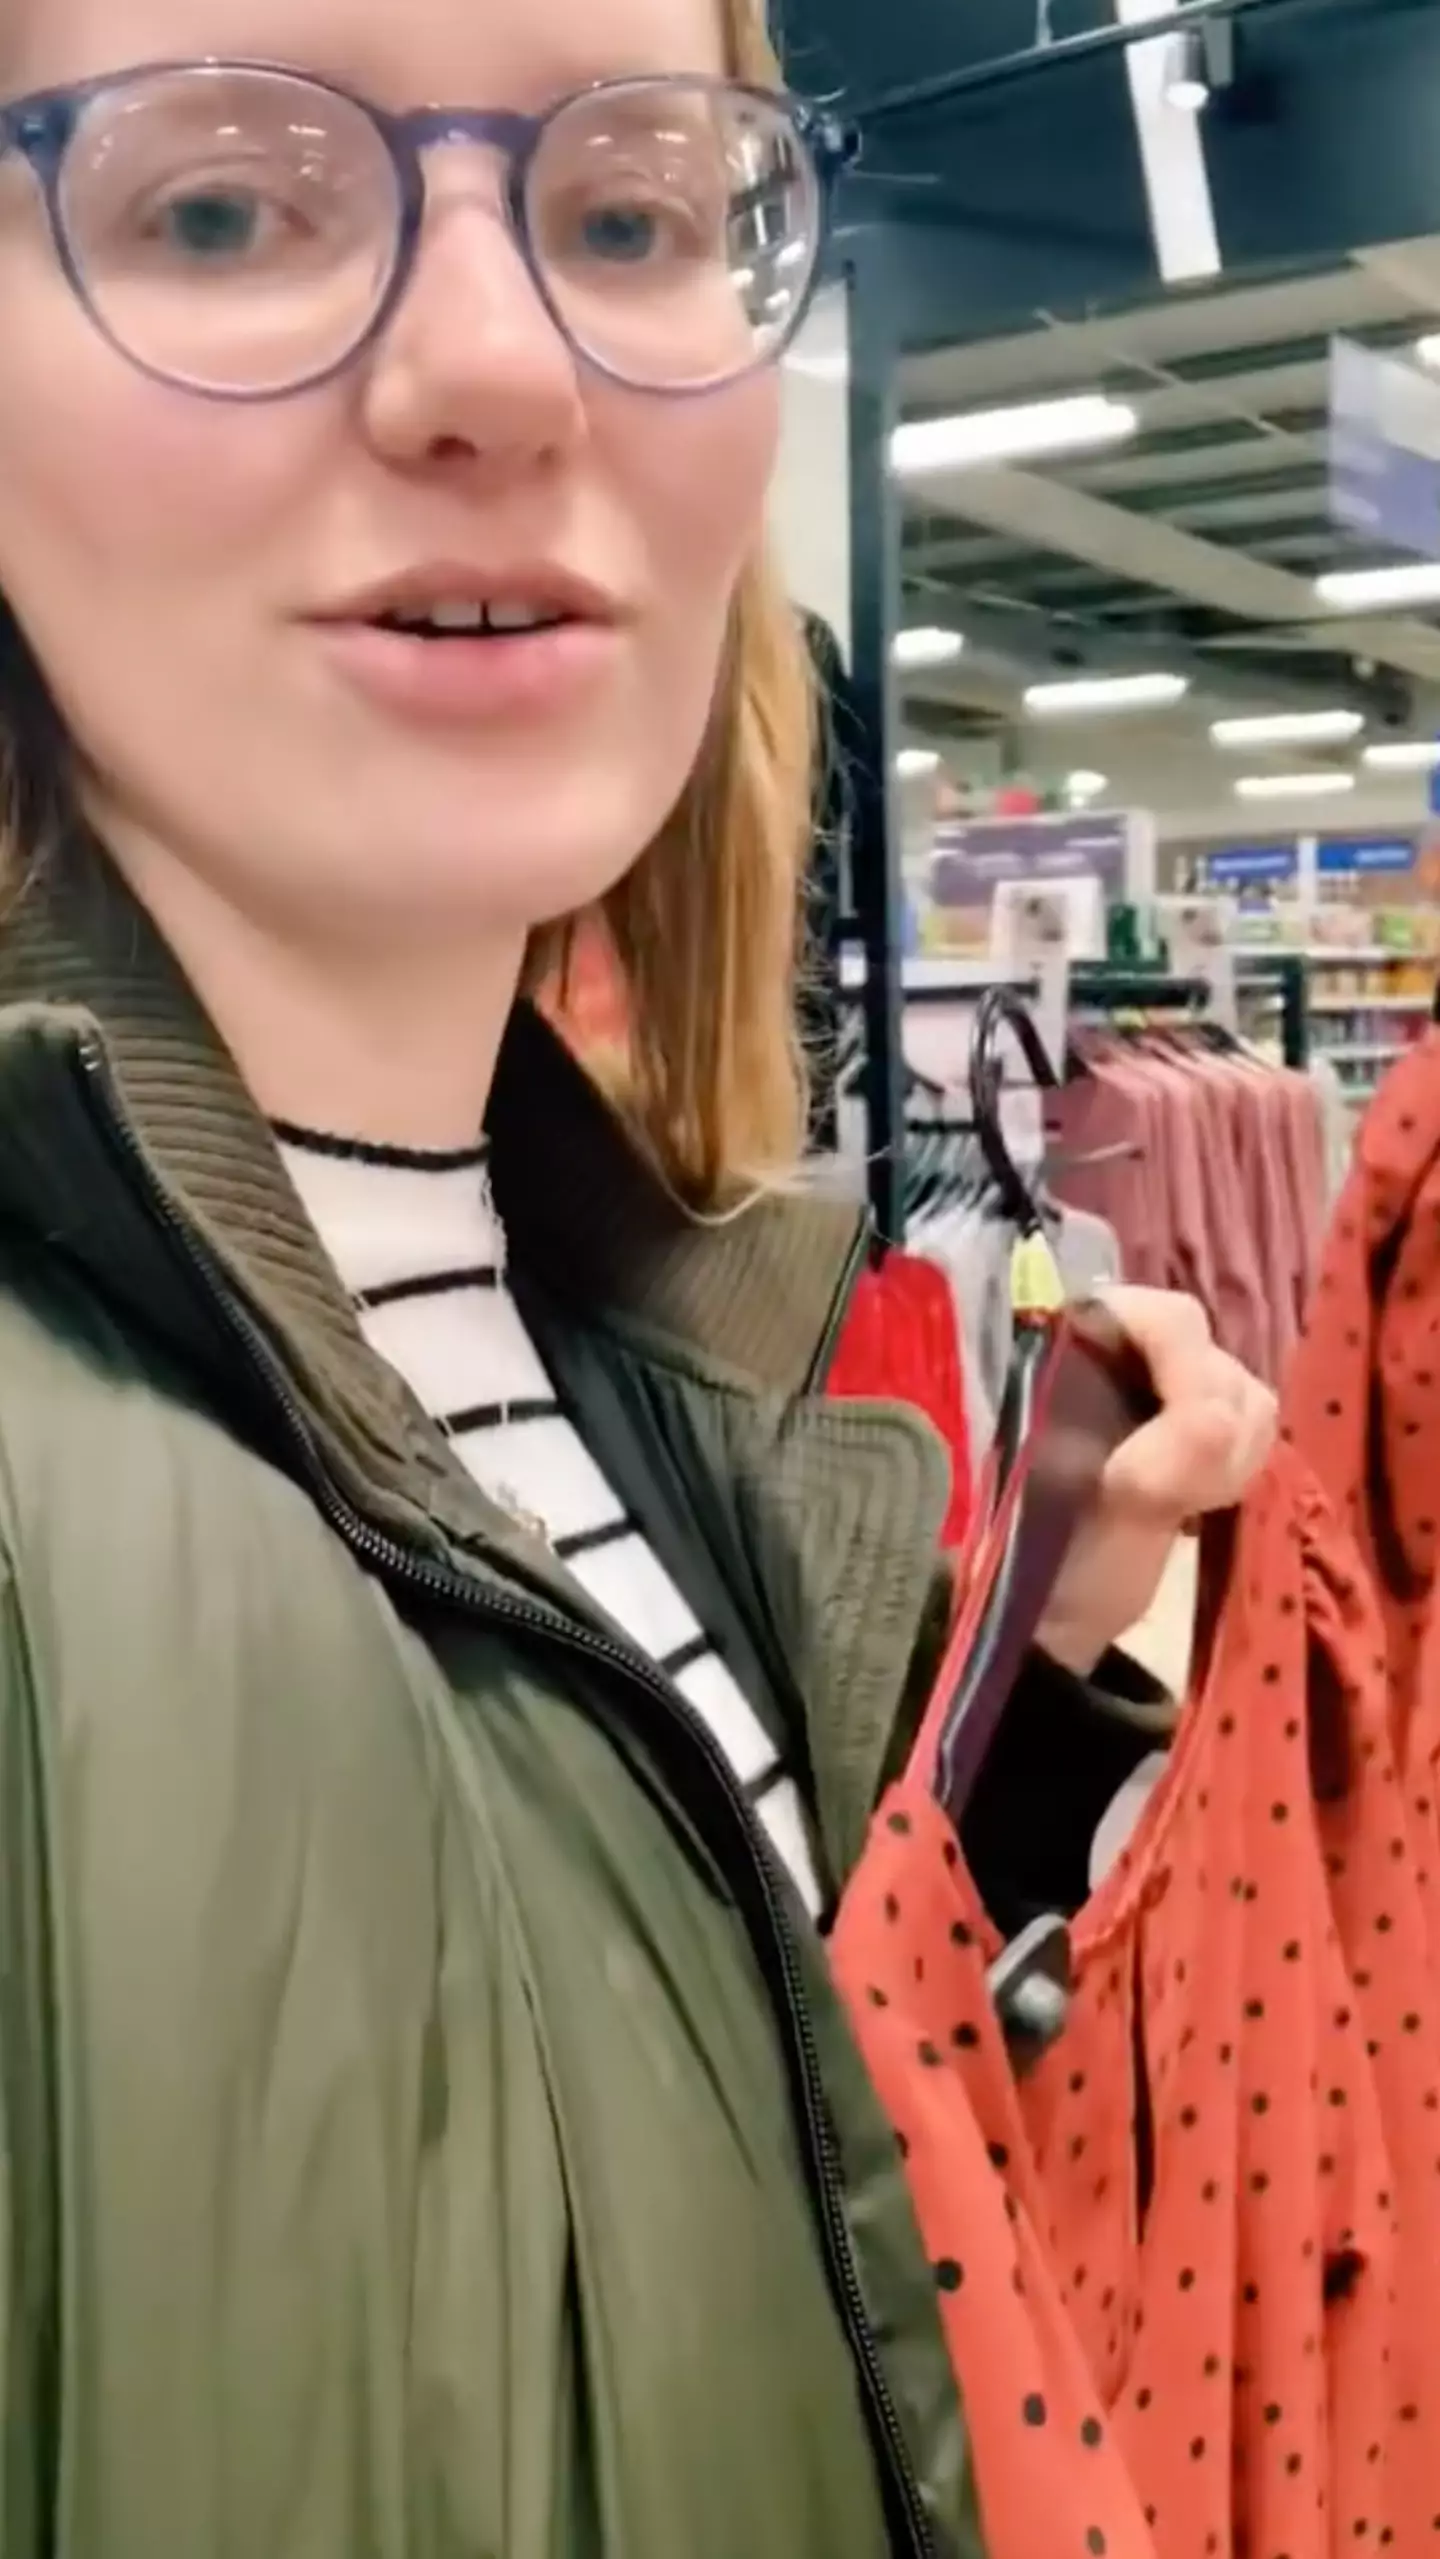 Billie explained she was shopping in Tesco (